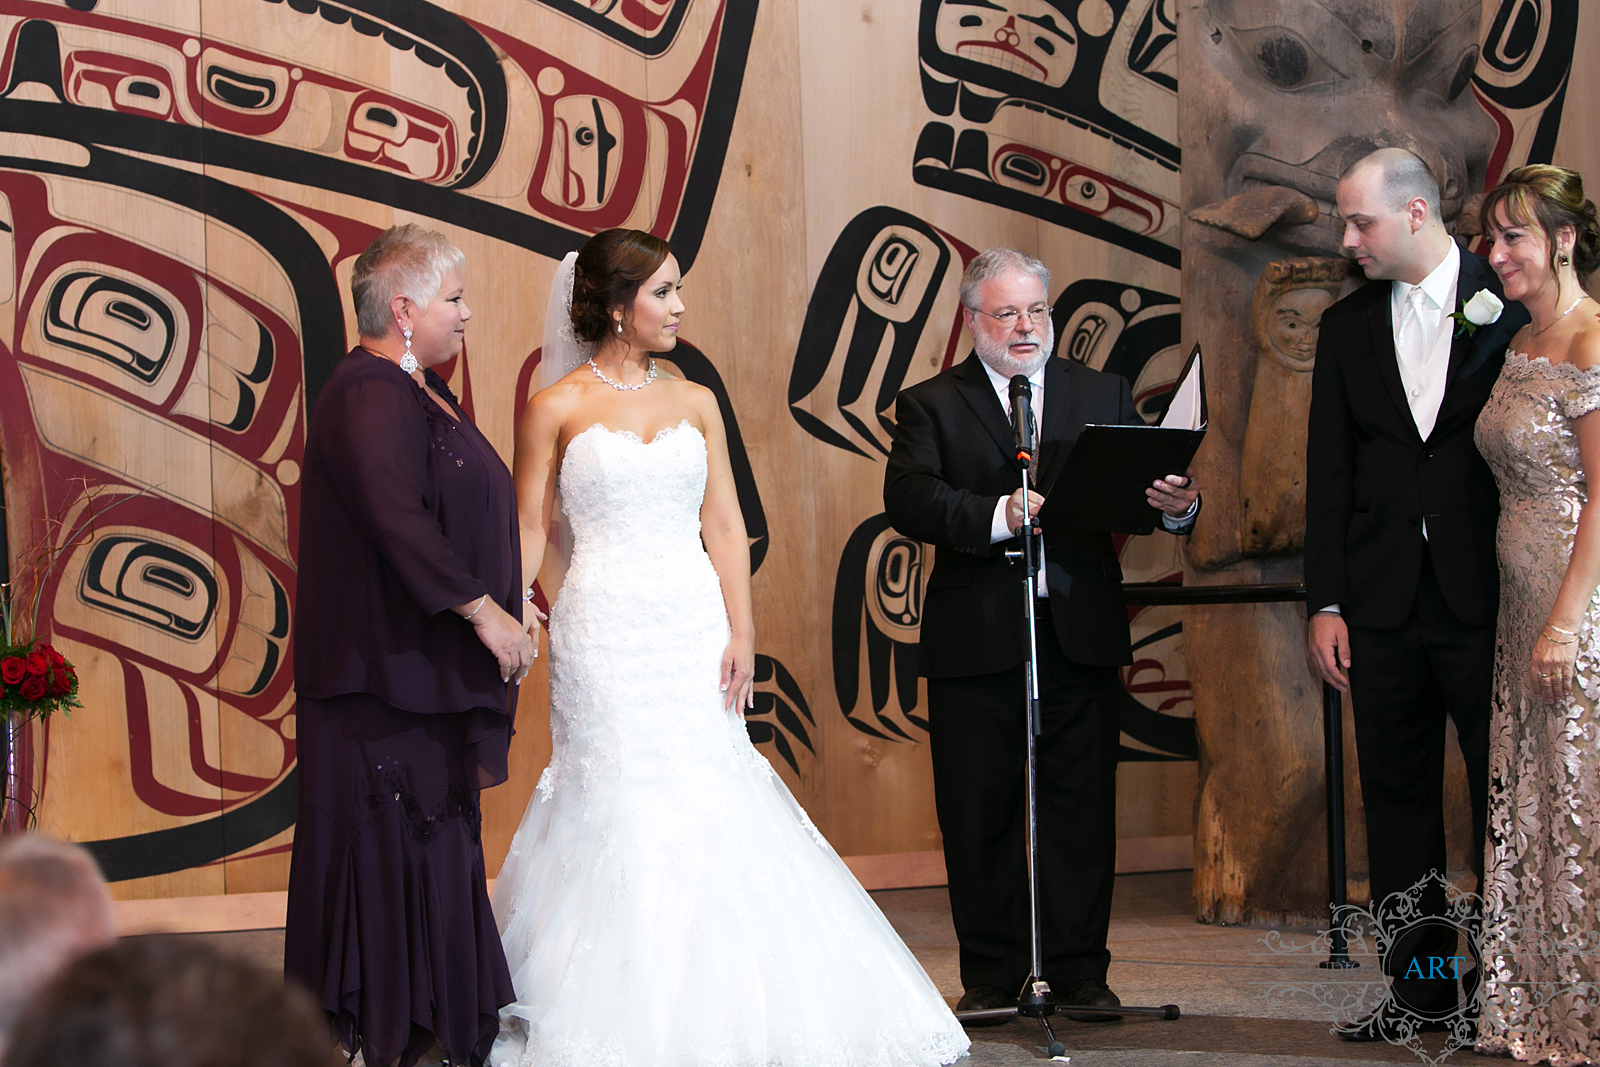 https://www.ottawaweddingmagazine.com/wp-content/uploads/2013/11/wedding-pictures-780.jpg